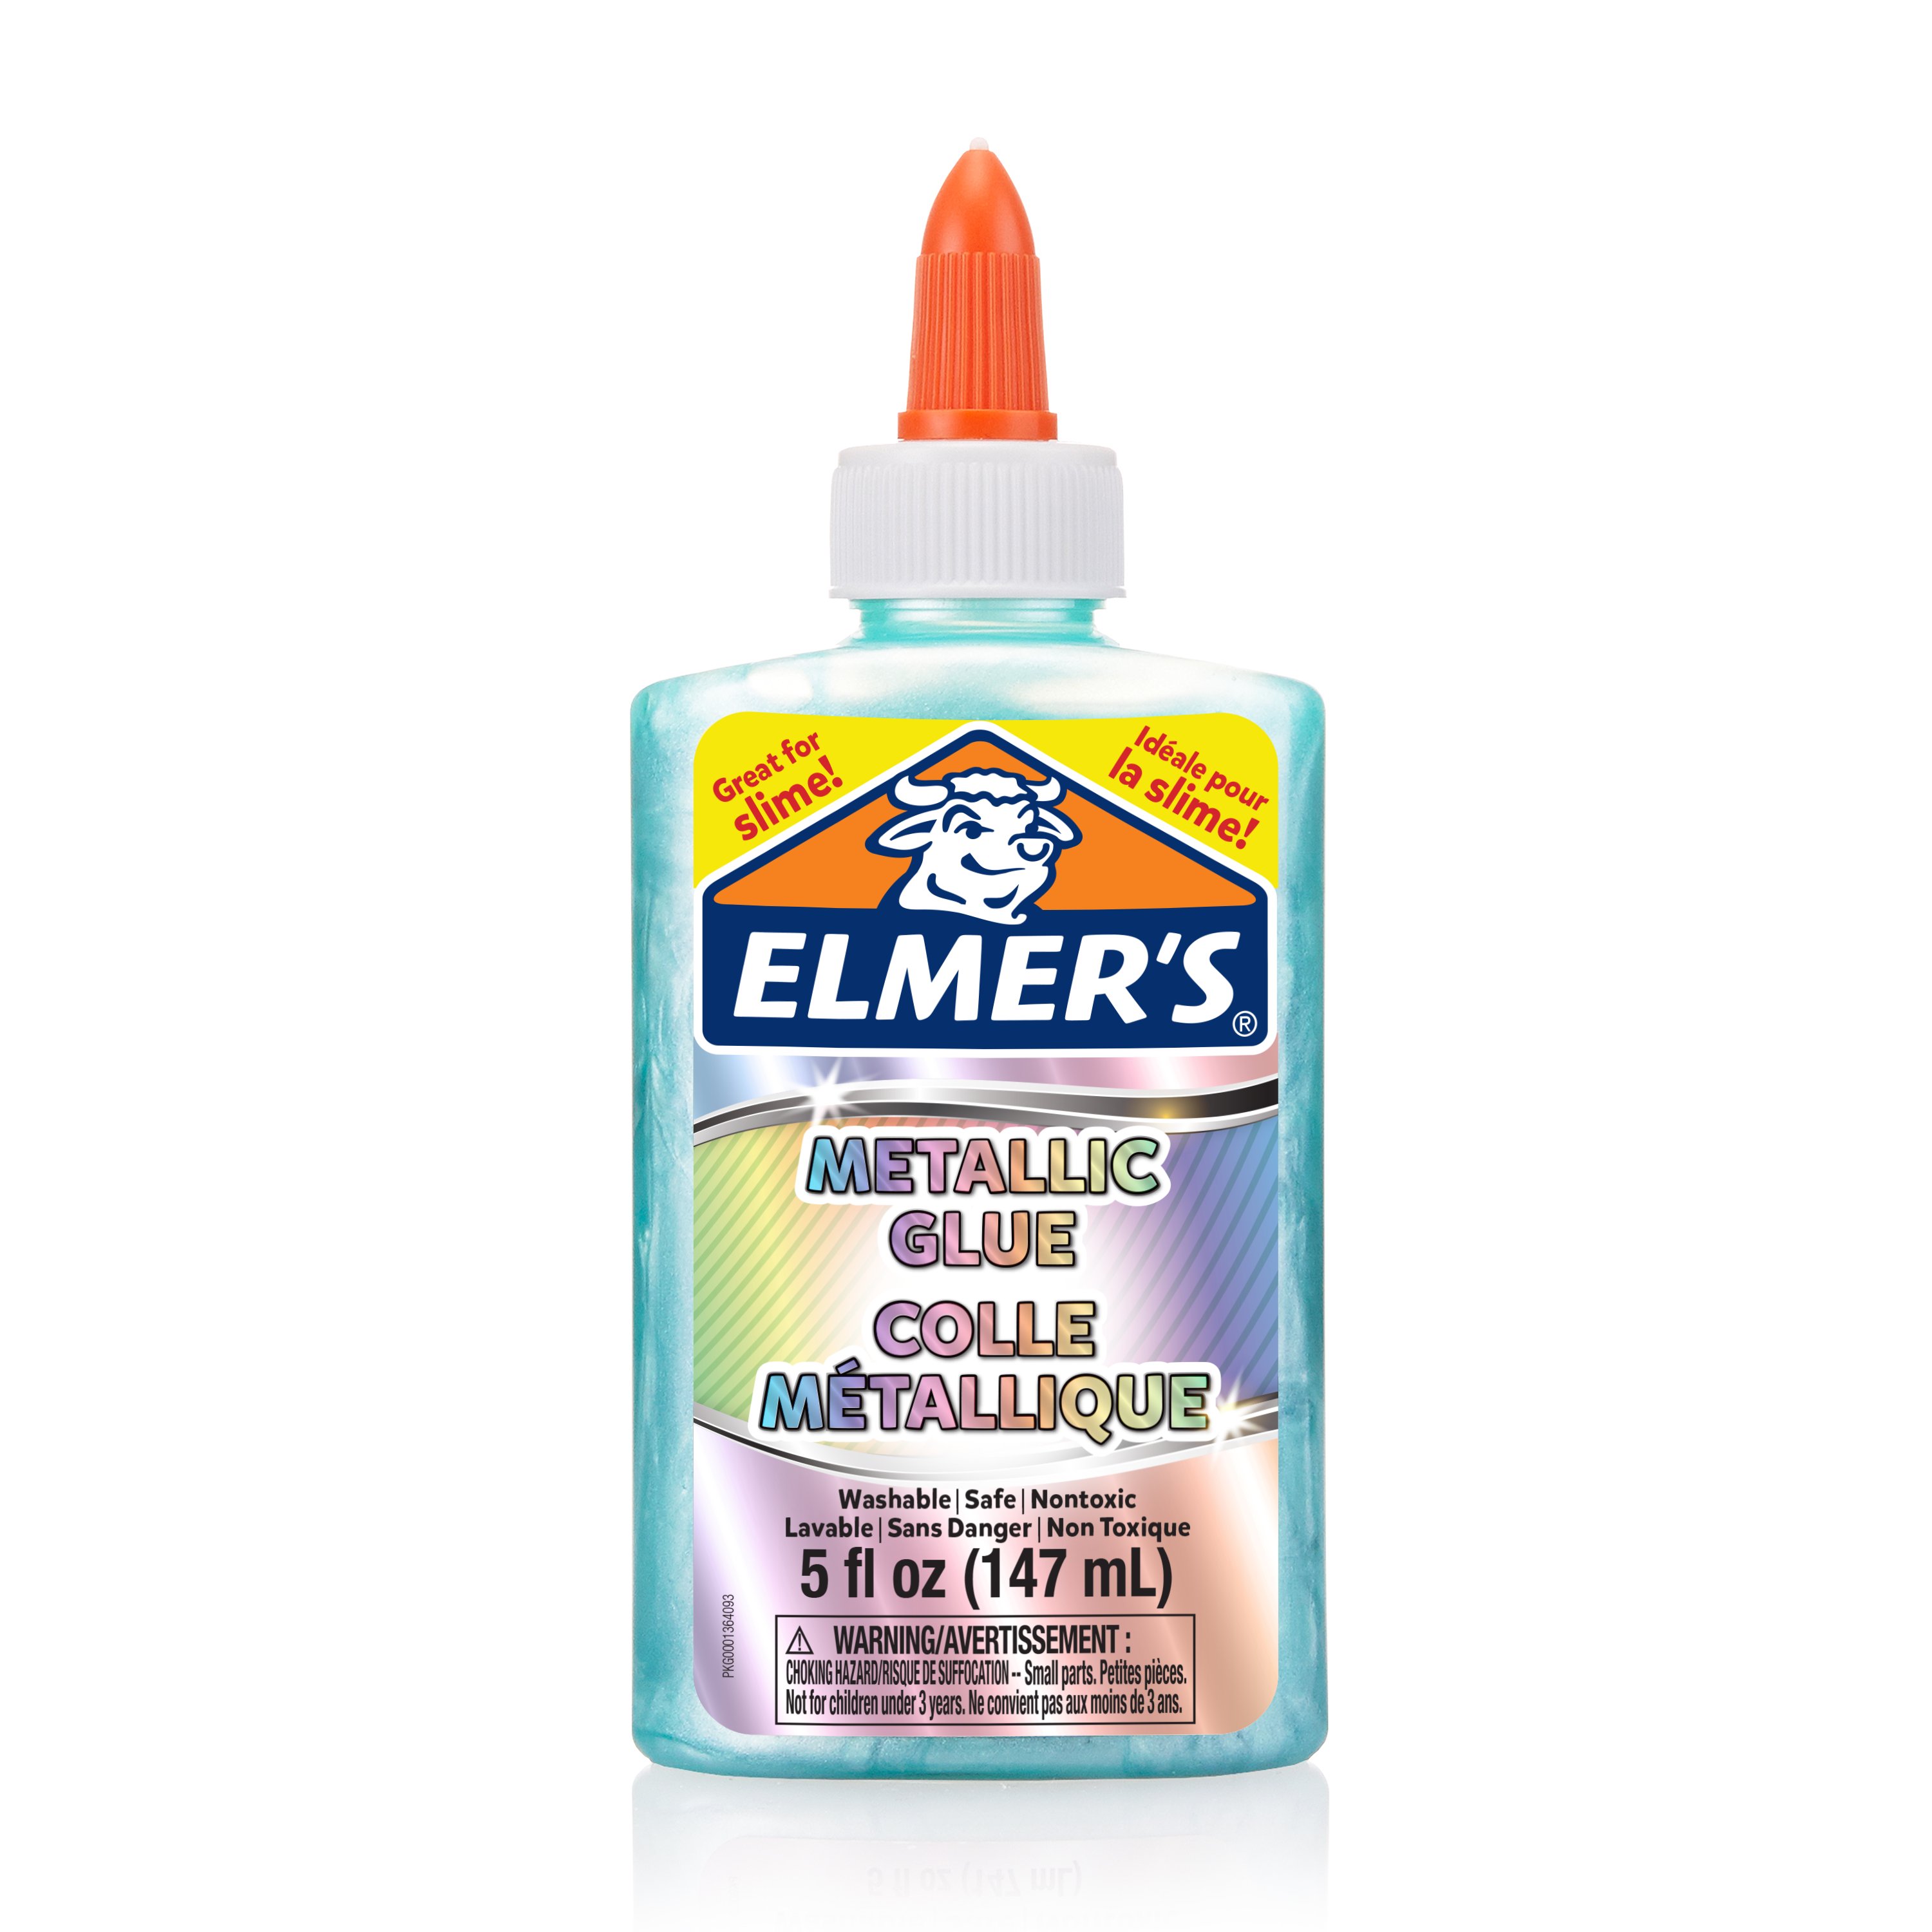 Elmer's Glue Glitter Glow in the Dark Paint Pour DIY Home Decor